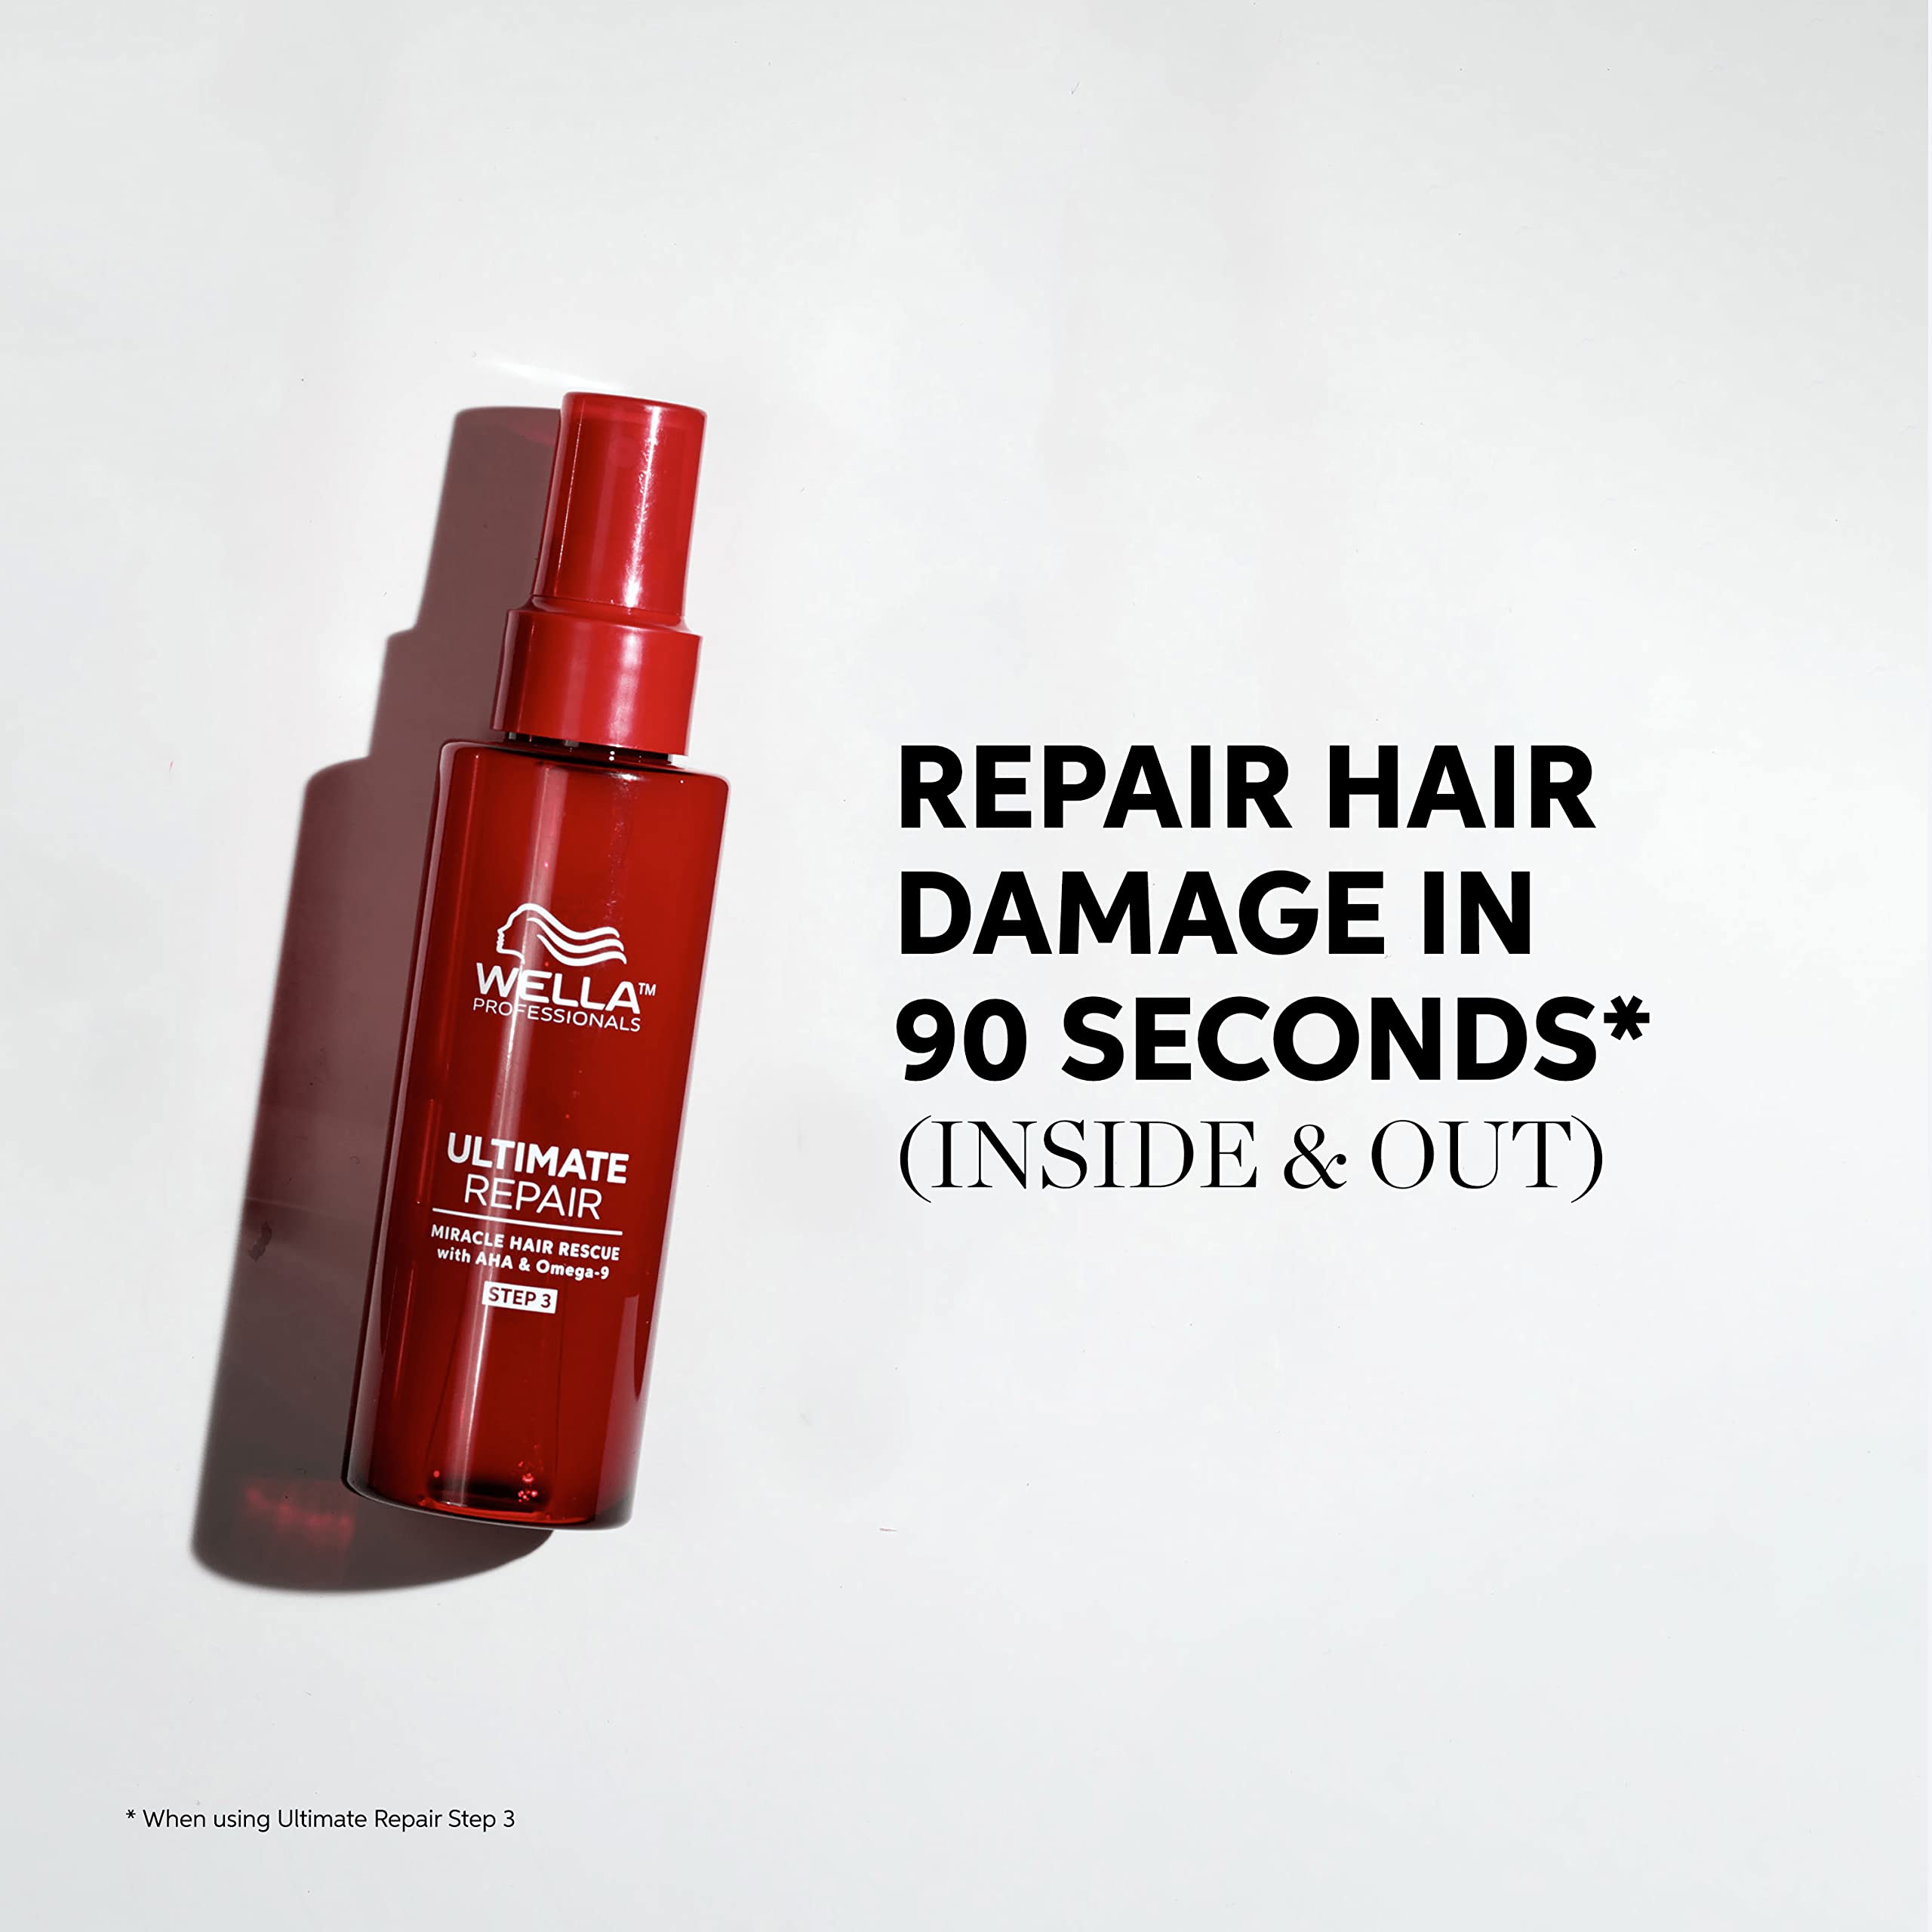 Wella Professionals ULTIMATE REPAIR Miracle Hair Rescue, Luxury Leave-In Hair Repair Treatment for Damaged Hair, 3.2oz